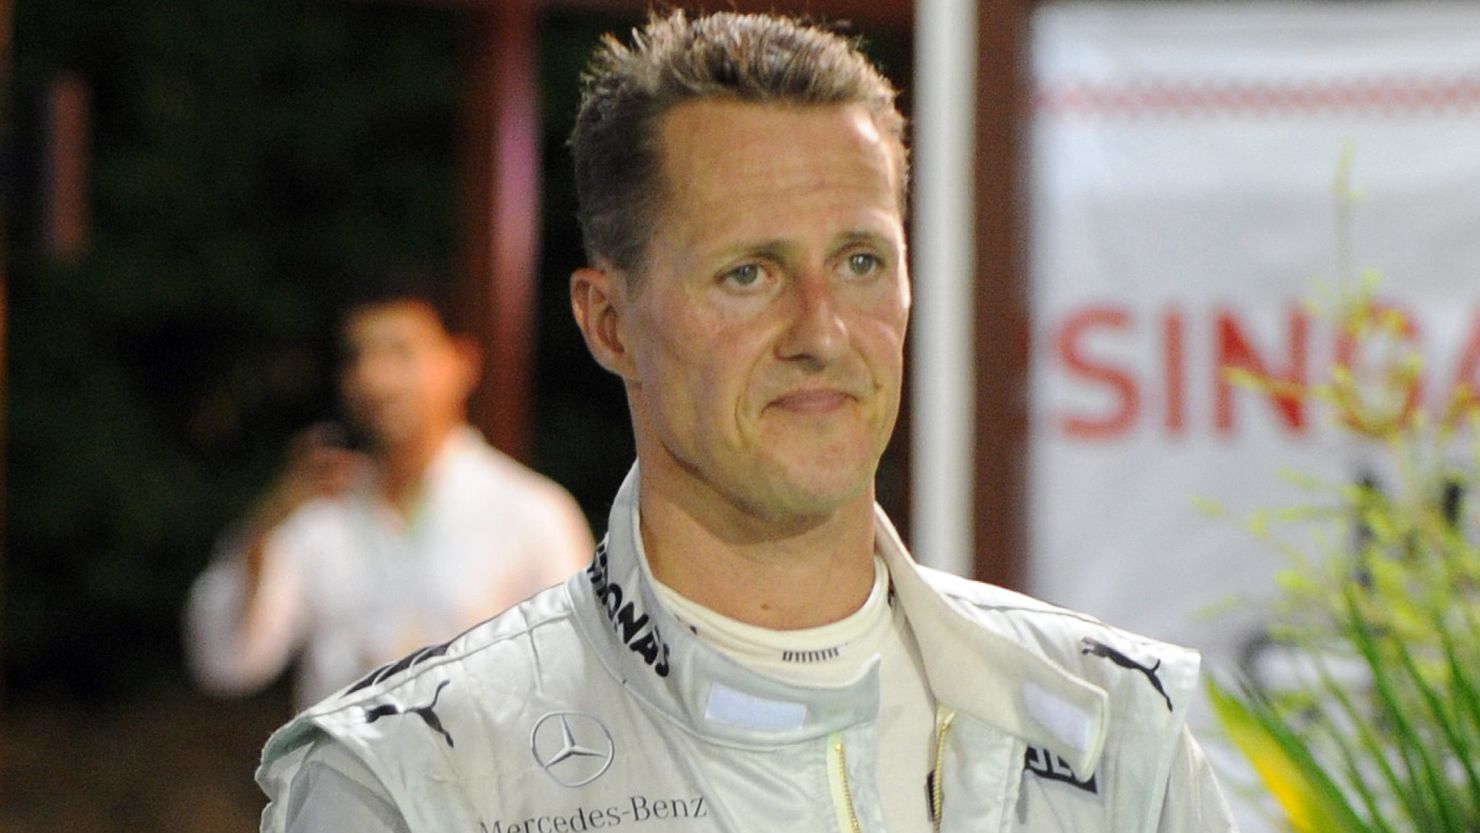 German Michael Schumacher won seven Formula One world championships between 1994 and 2004.